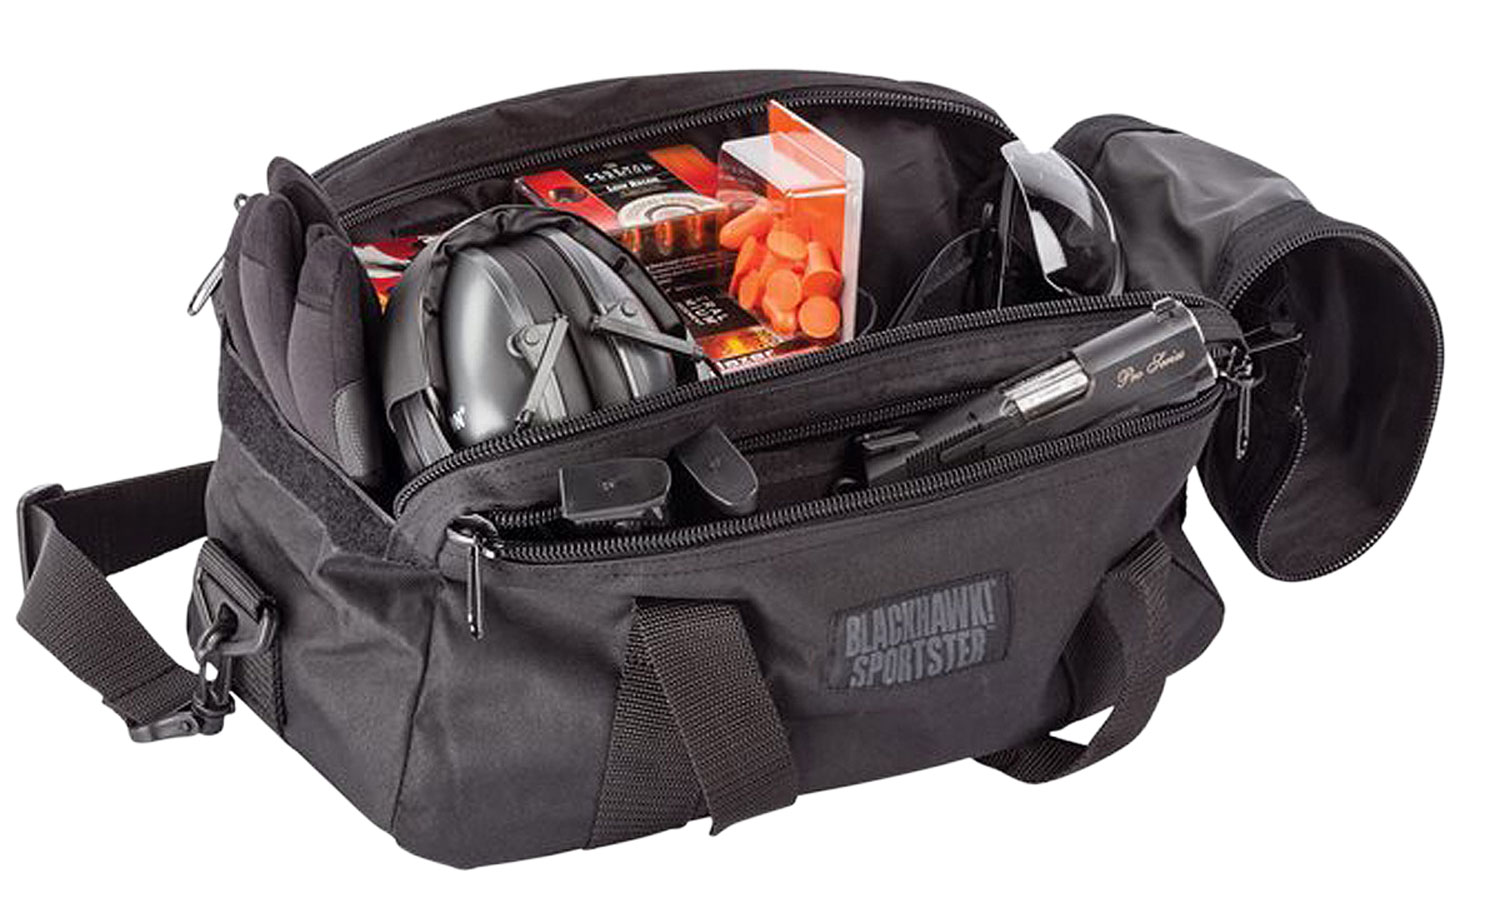 Blackhawk 74RB02BK Sportster Pistol Range Bag Black 600D Polyester with 2 Pistol Rugs, STRIKE Webbing, Foam Padding & Self-Healing Zippers 16